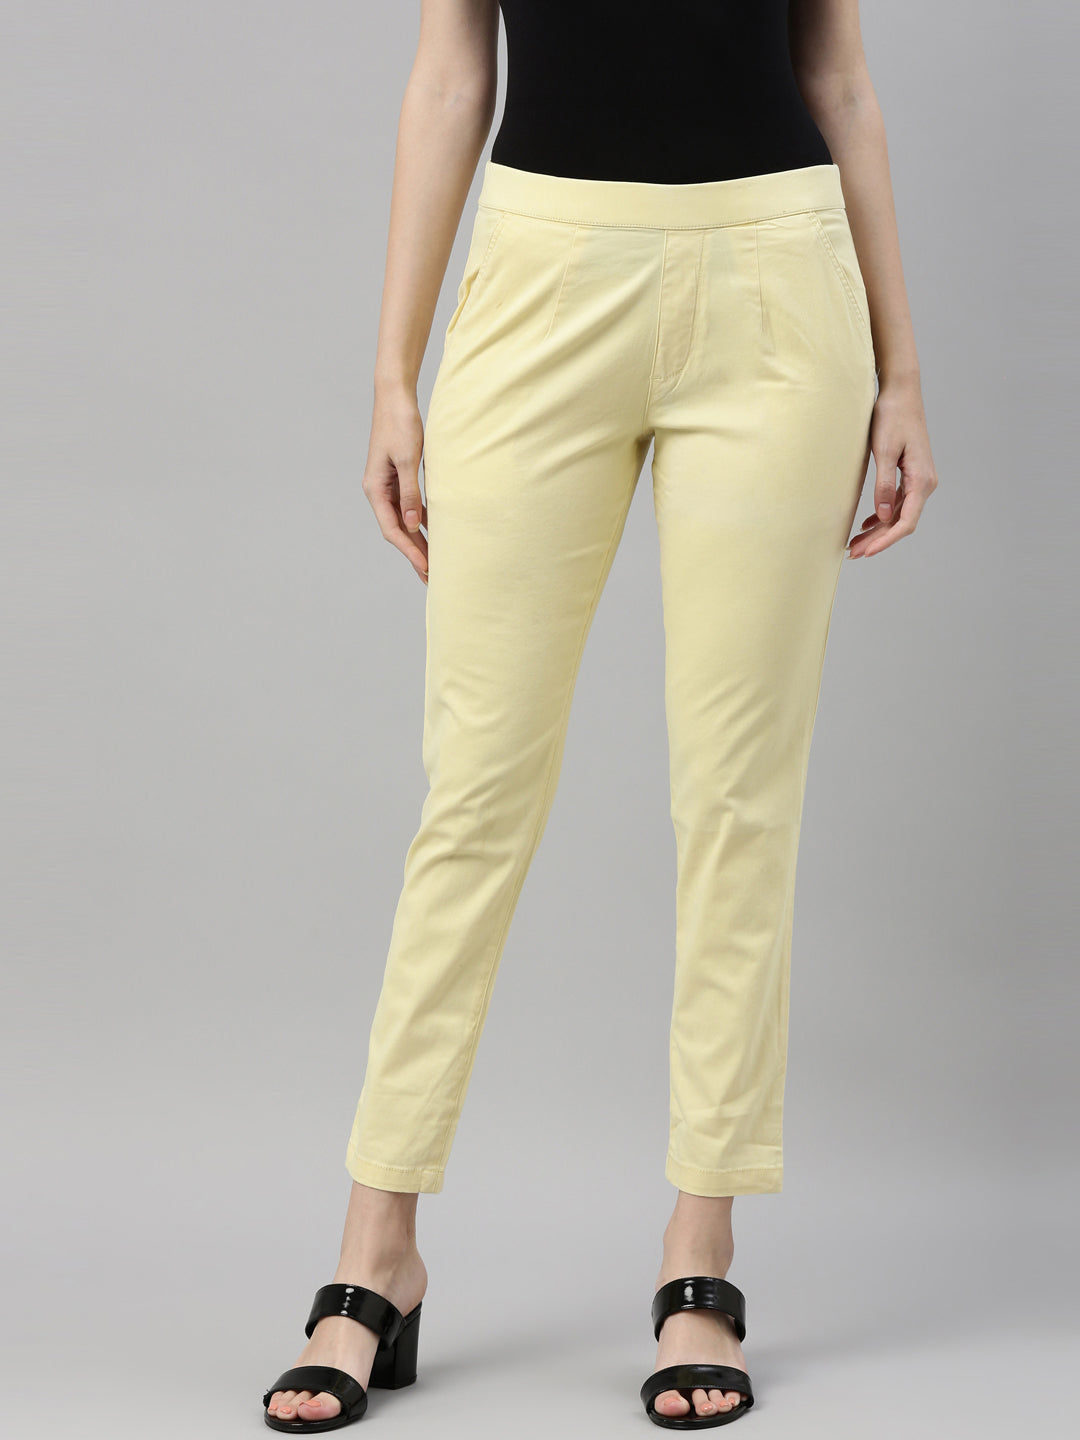 Women's High-rise Cargo Utility Pants - Wild Fable™ Light Yellow Xs : Target